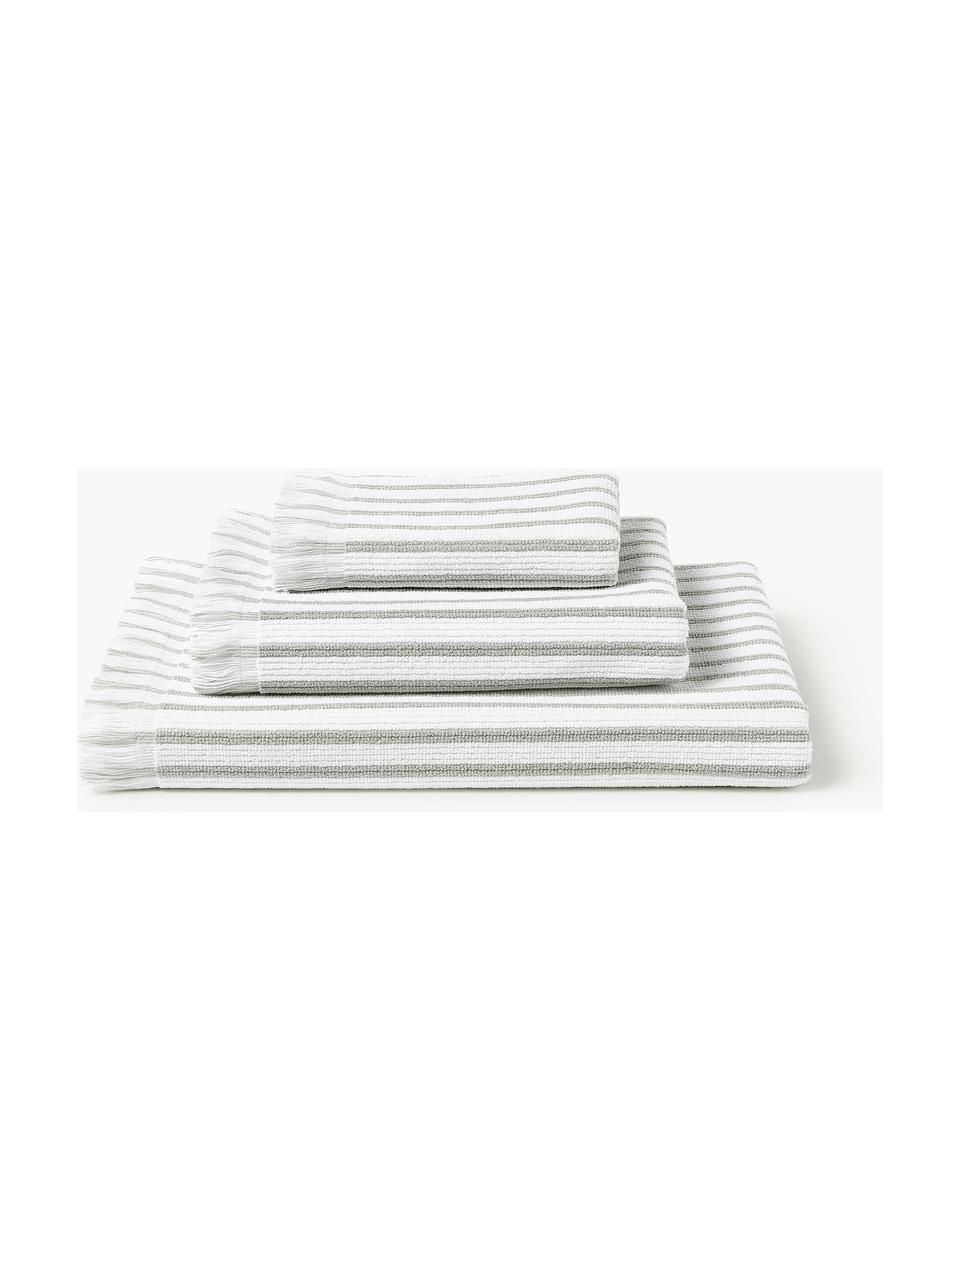 Handtuch-Set Irma, verschiedene Setgrößen, Weiß, Hellgrau, 4er-Set (Handtuch & Duschtuch)